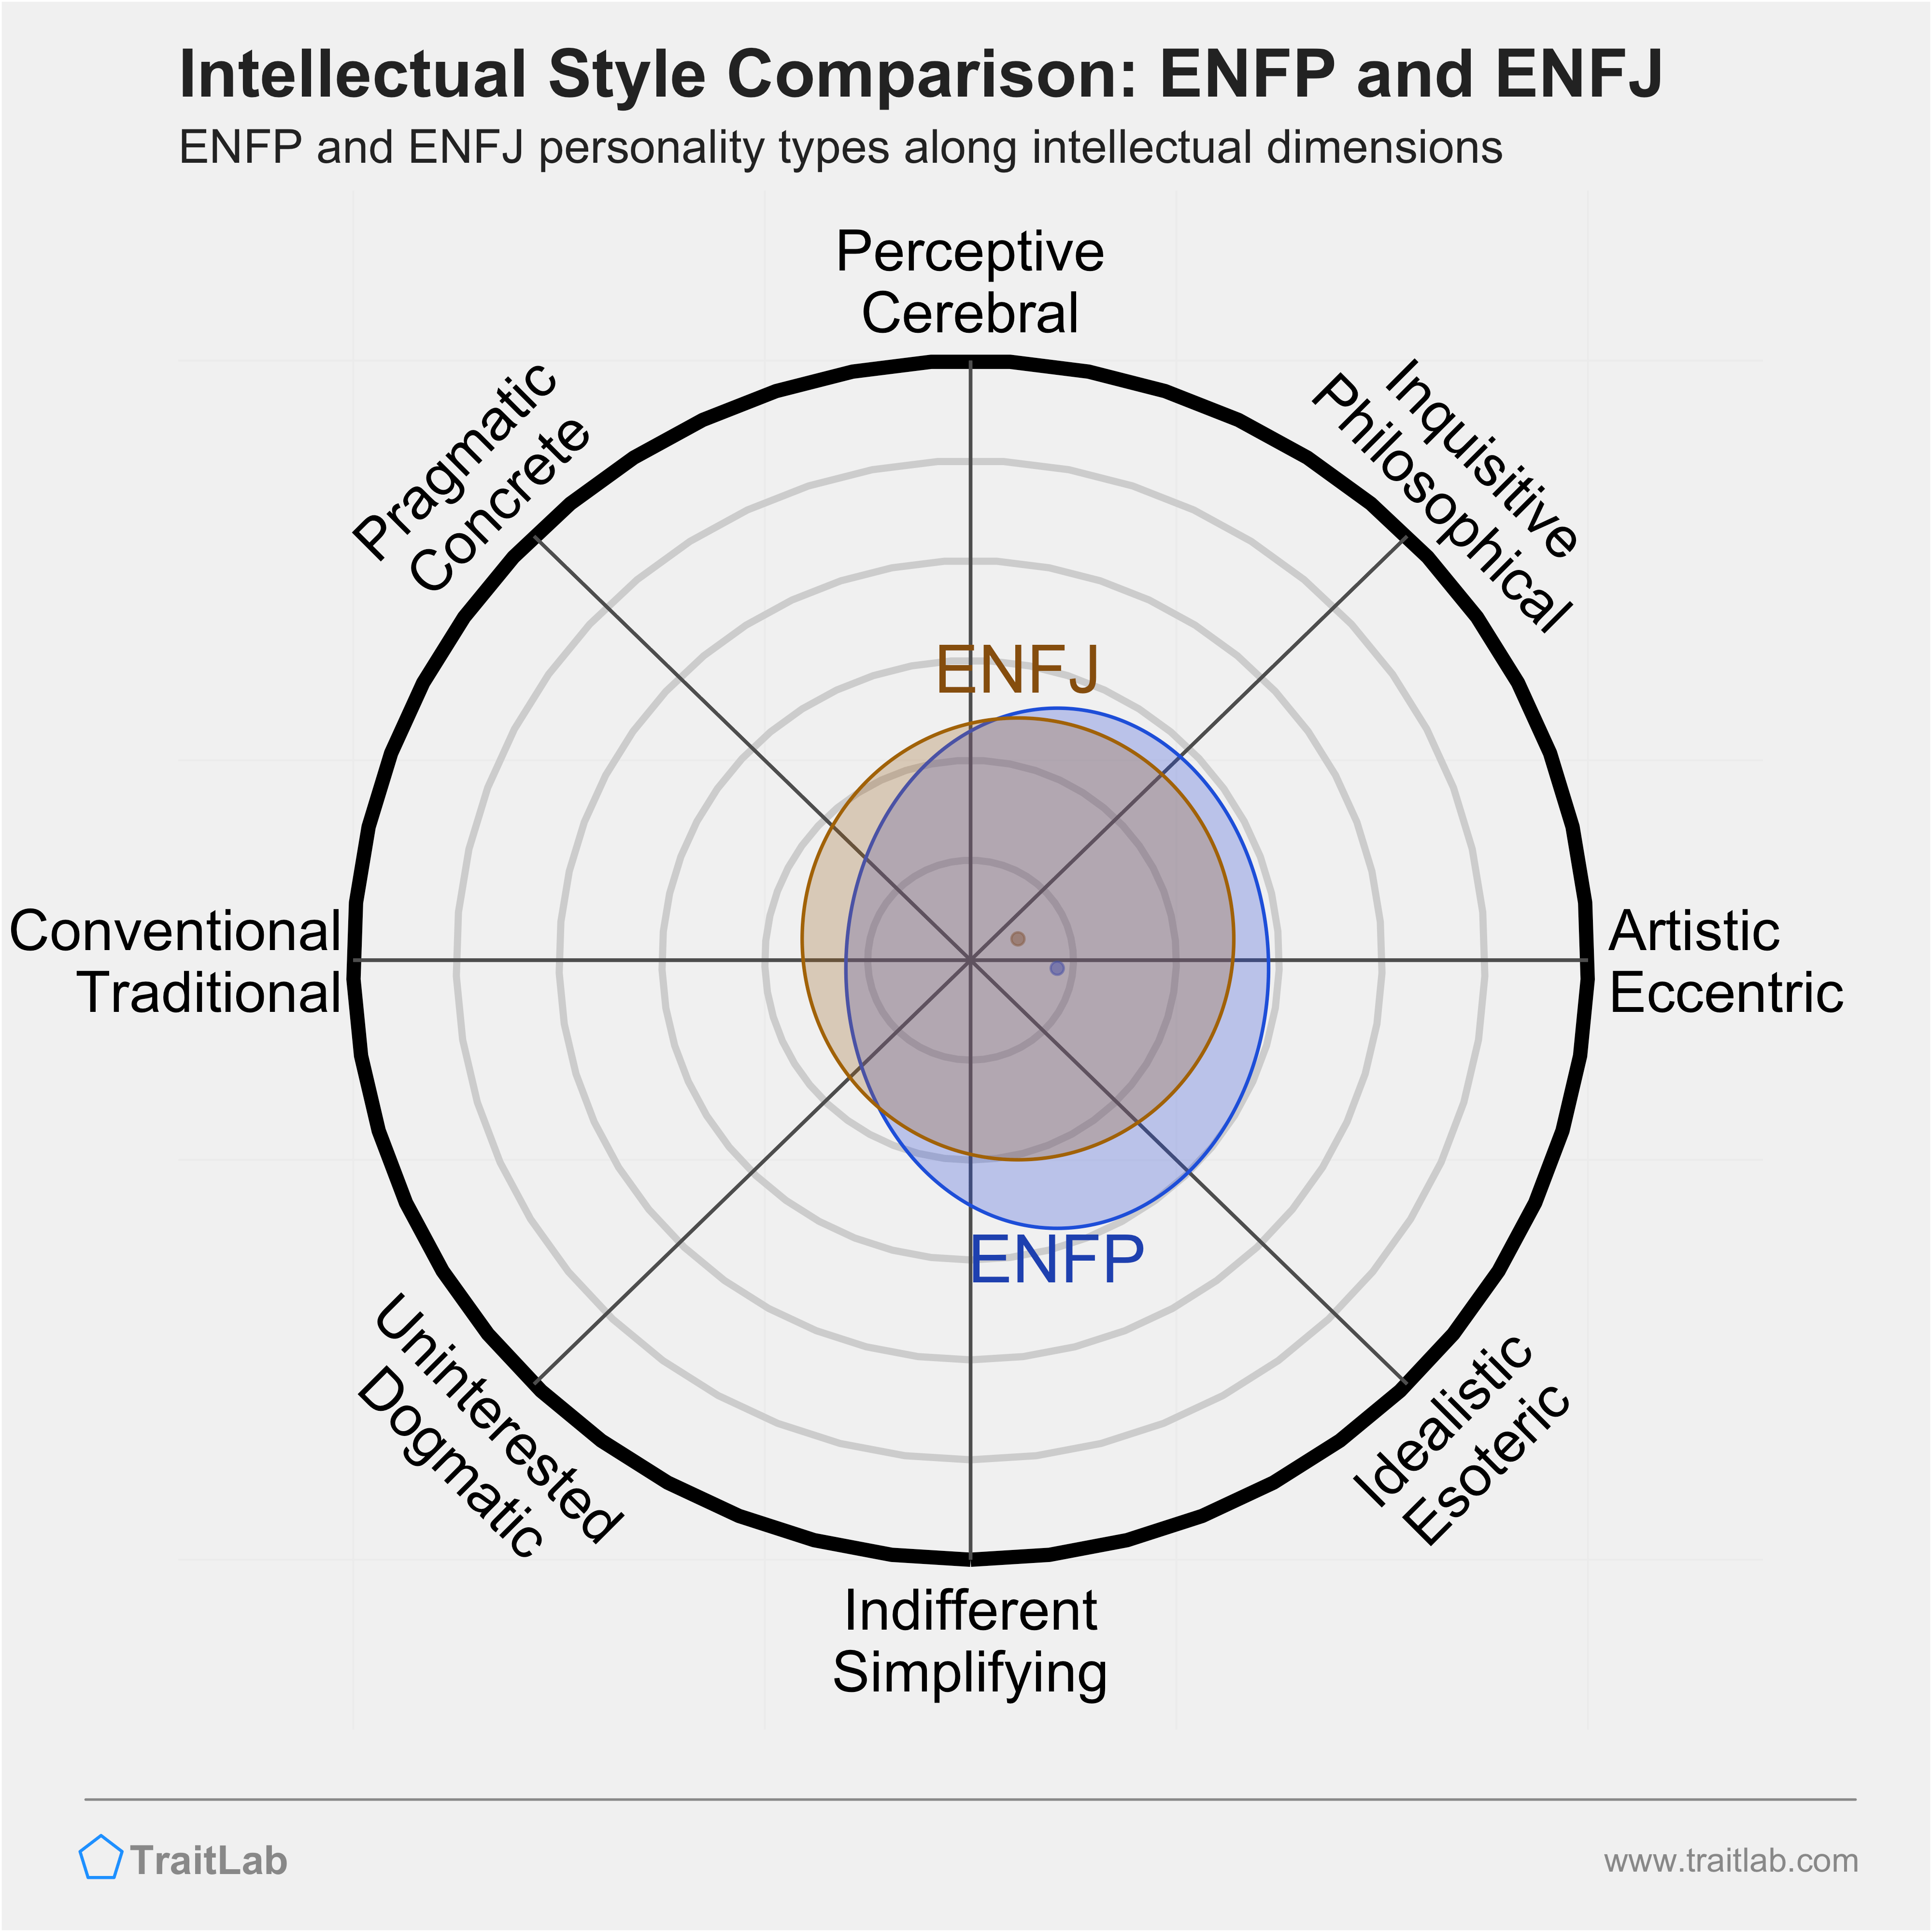 ENFP and ENFJ comparison across intellectual dimensions